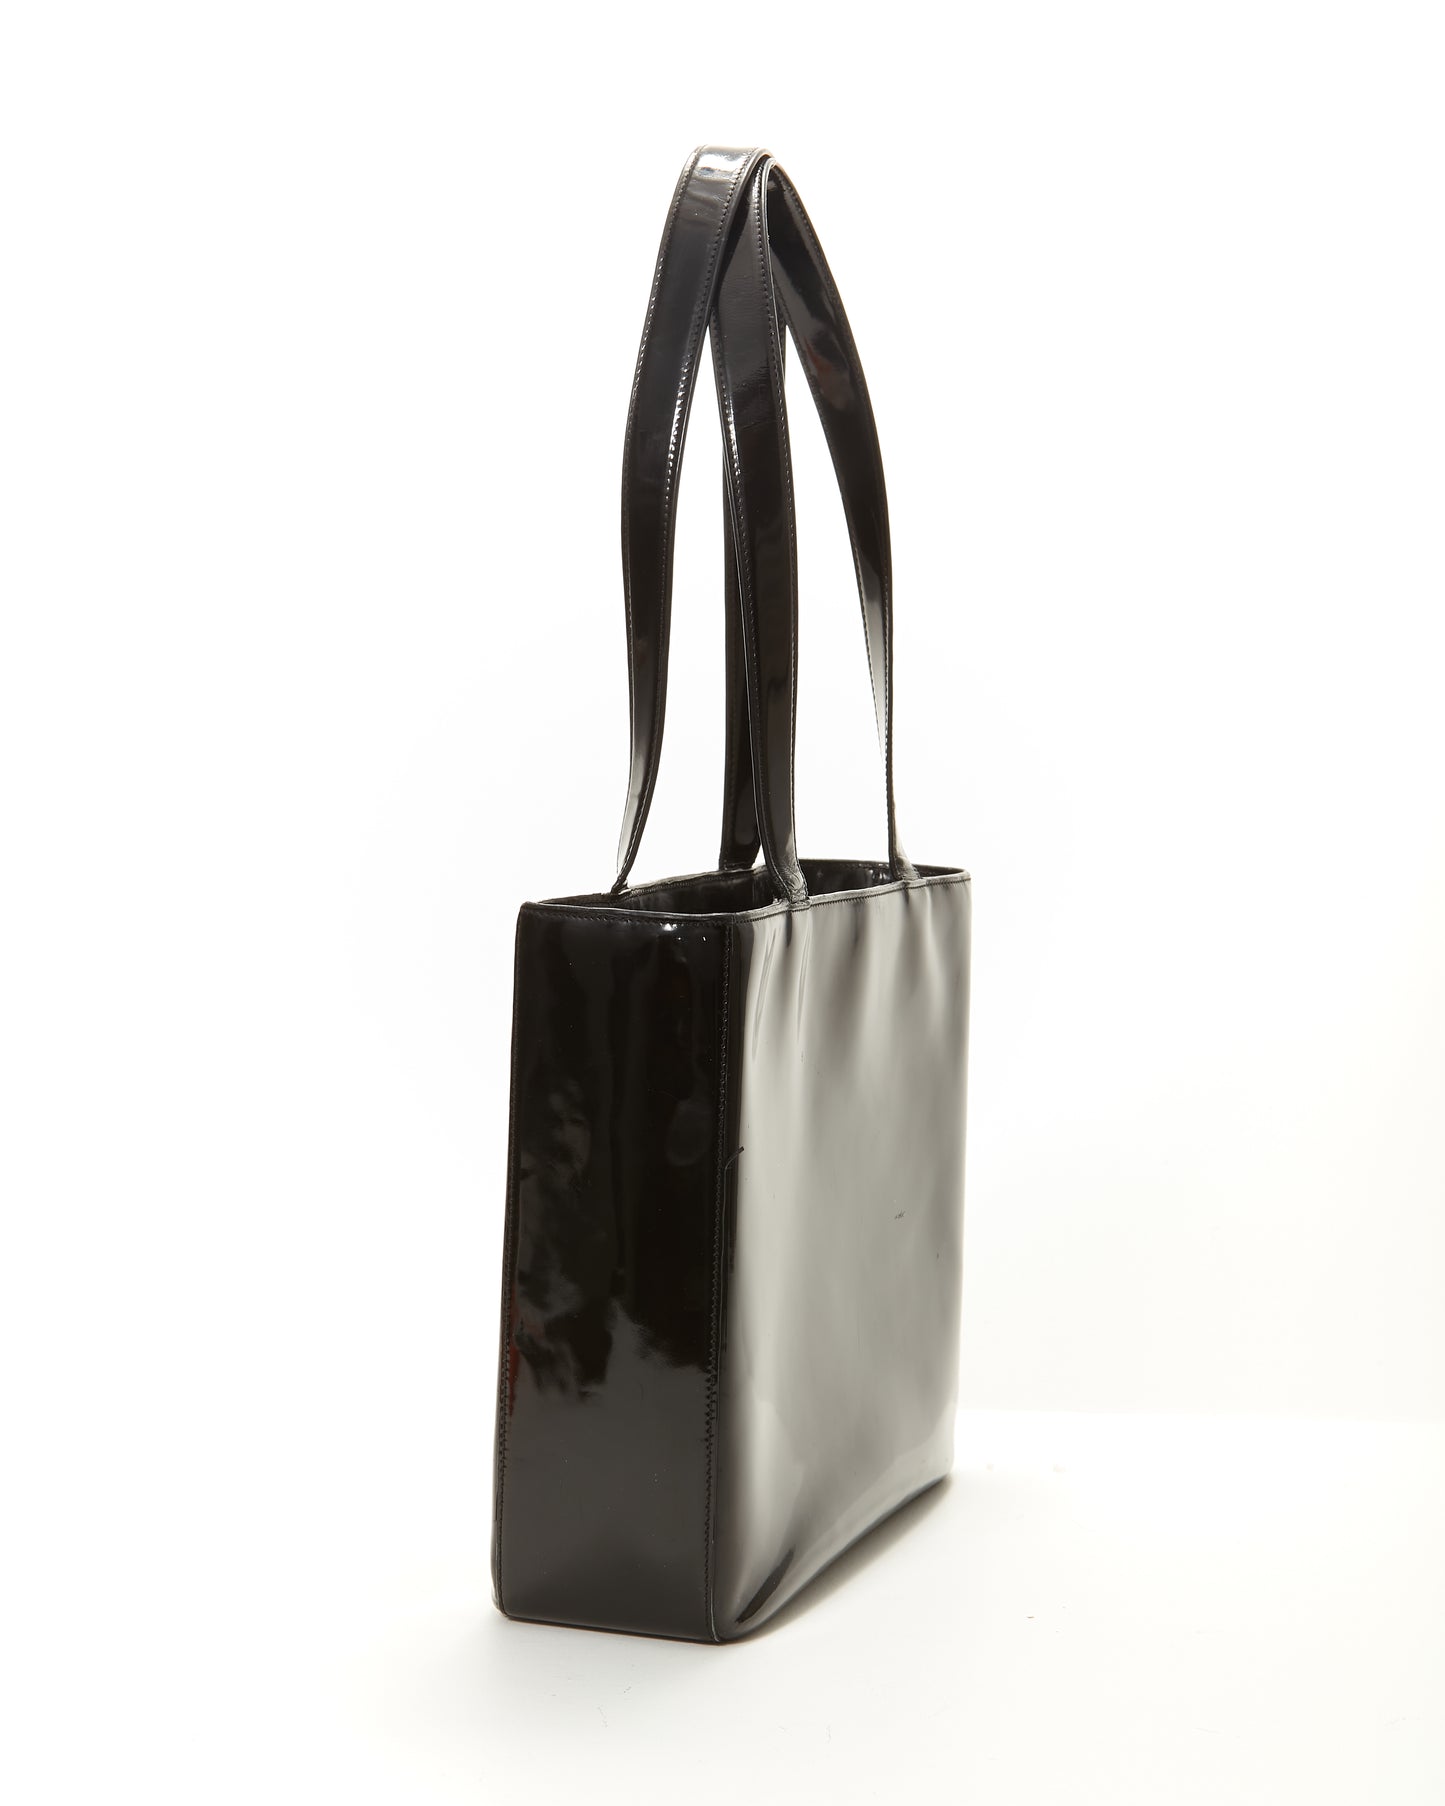 Chanel Black Patent Logo Small Square Shoulder Bag